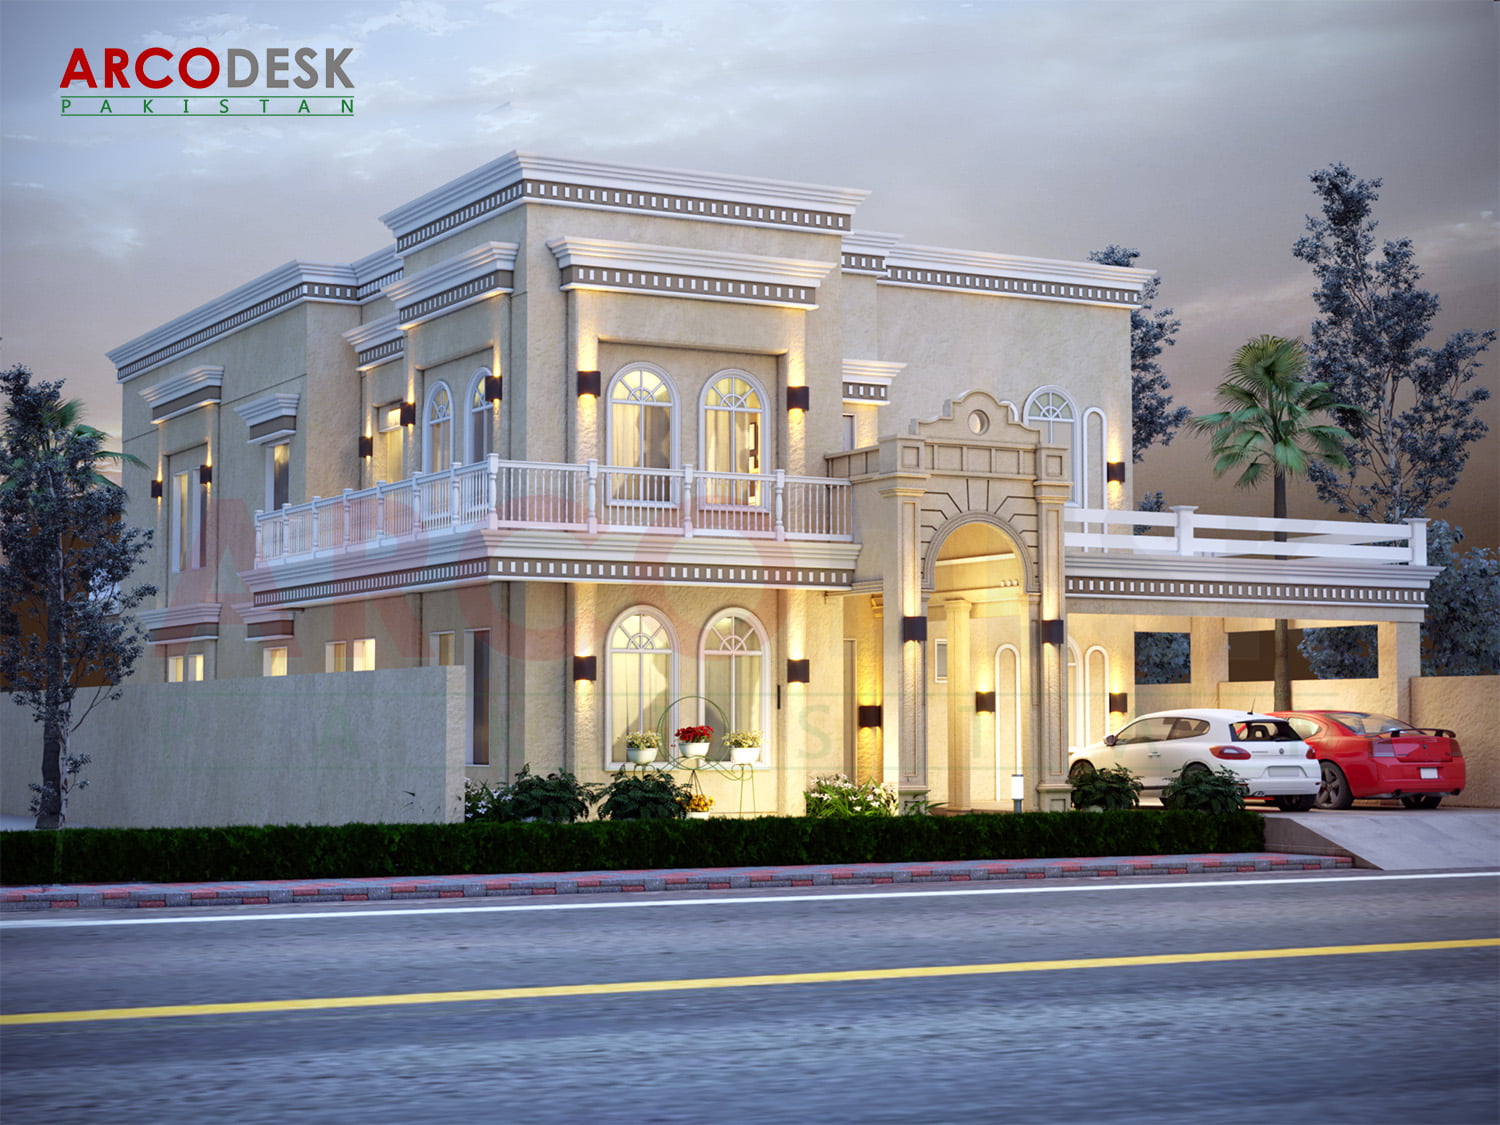 1 Kanal Beautiful Classical House Design at FGEHA G13 Islamabad